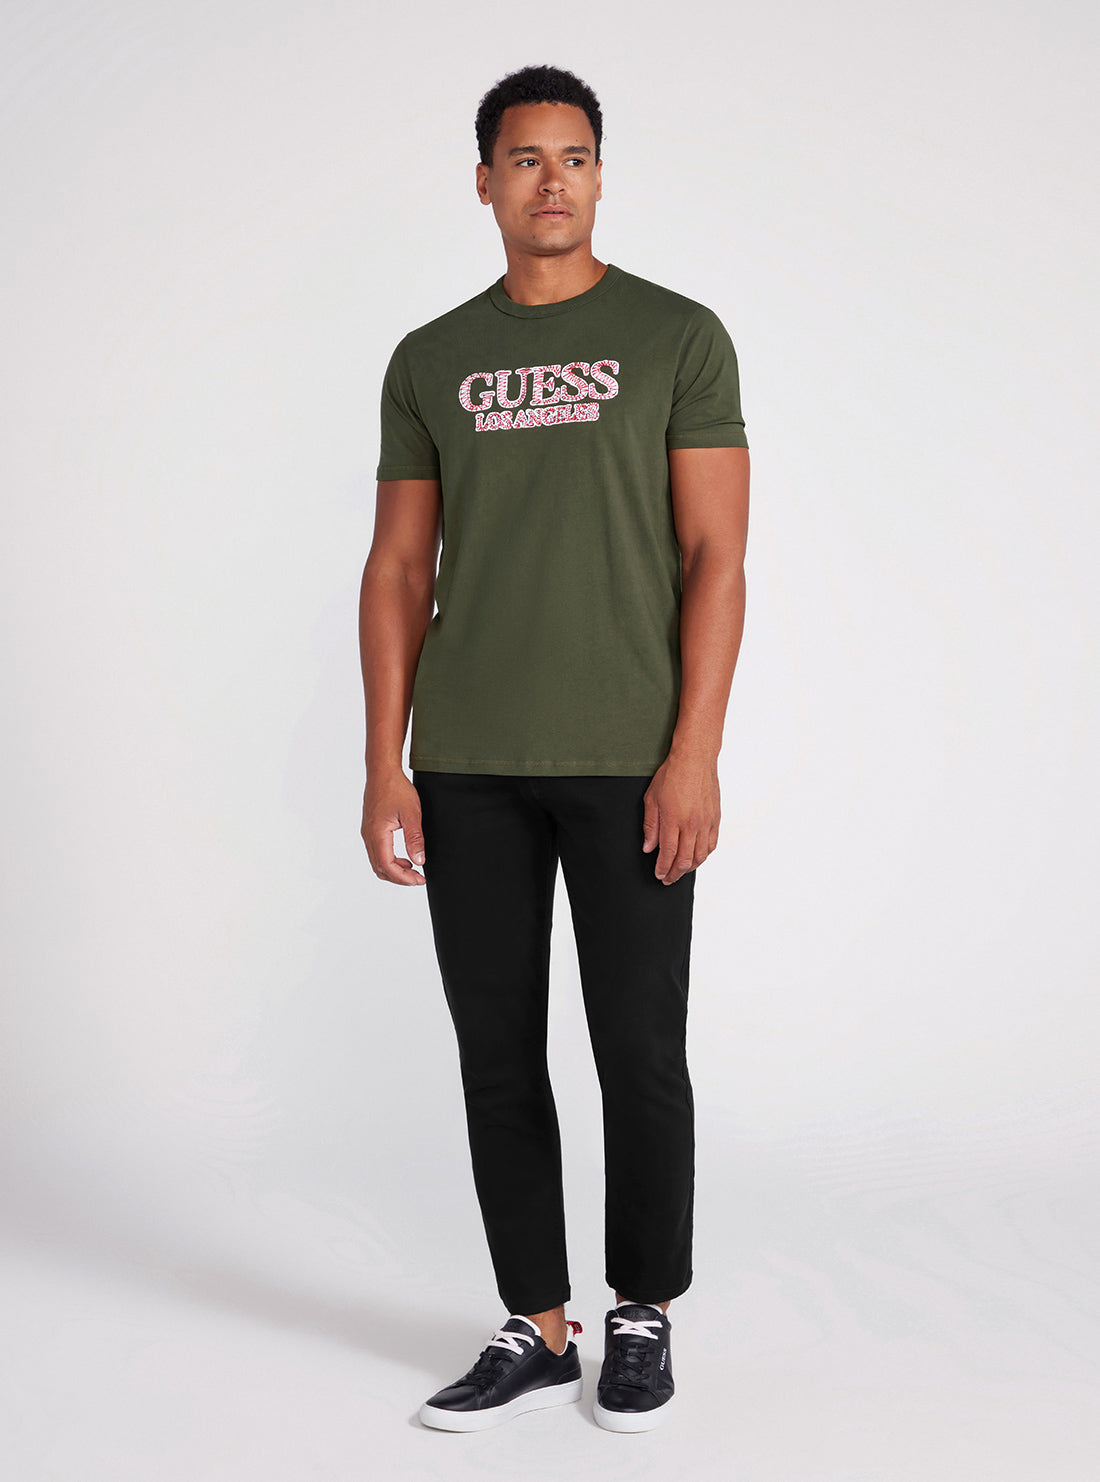 Sage Green L.A. Logo T-Shirt | GUESS Men's Apparel | full view